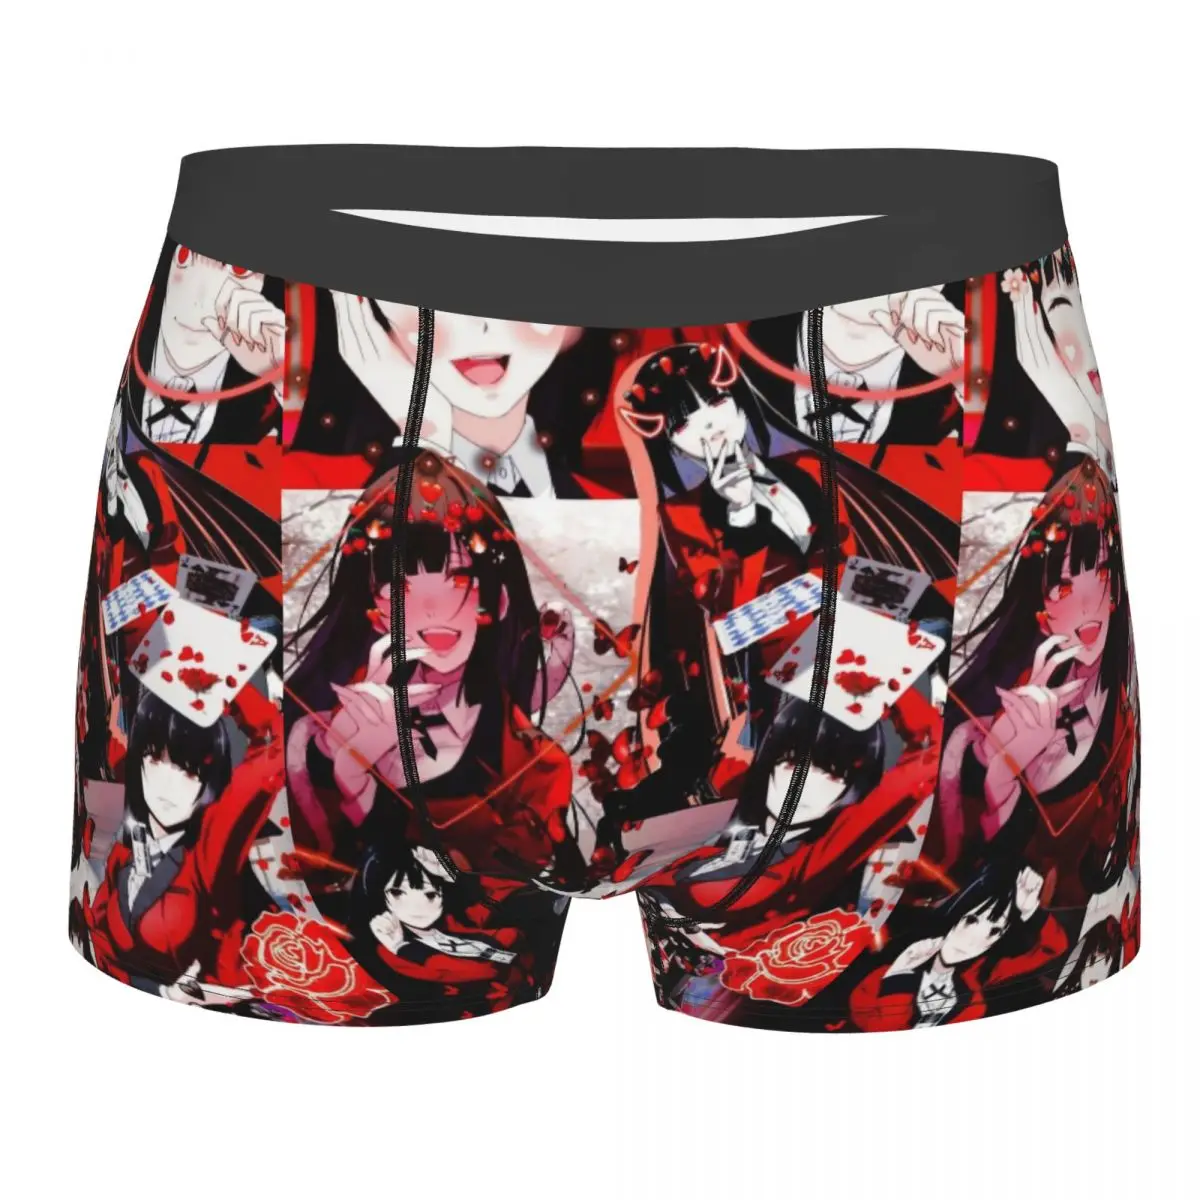 Jabami Yumeko Collage Man Underwear Kakegurui Japan Anime Boxer Briefs Shorts Panties Hot Soft Underpants for Male